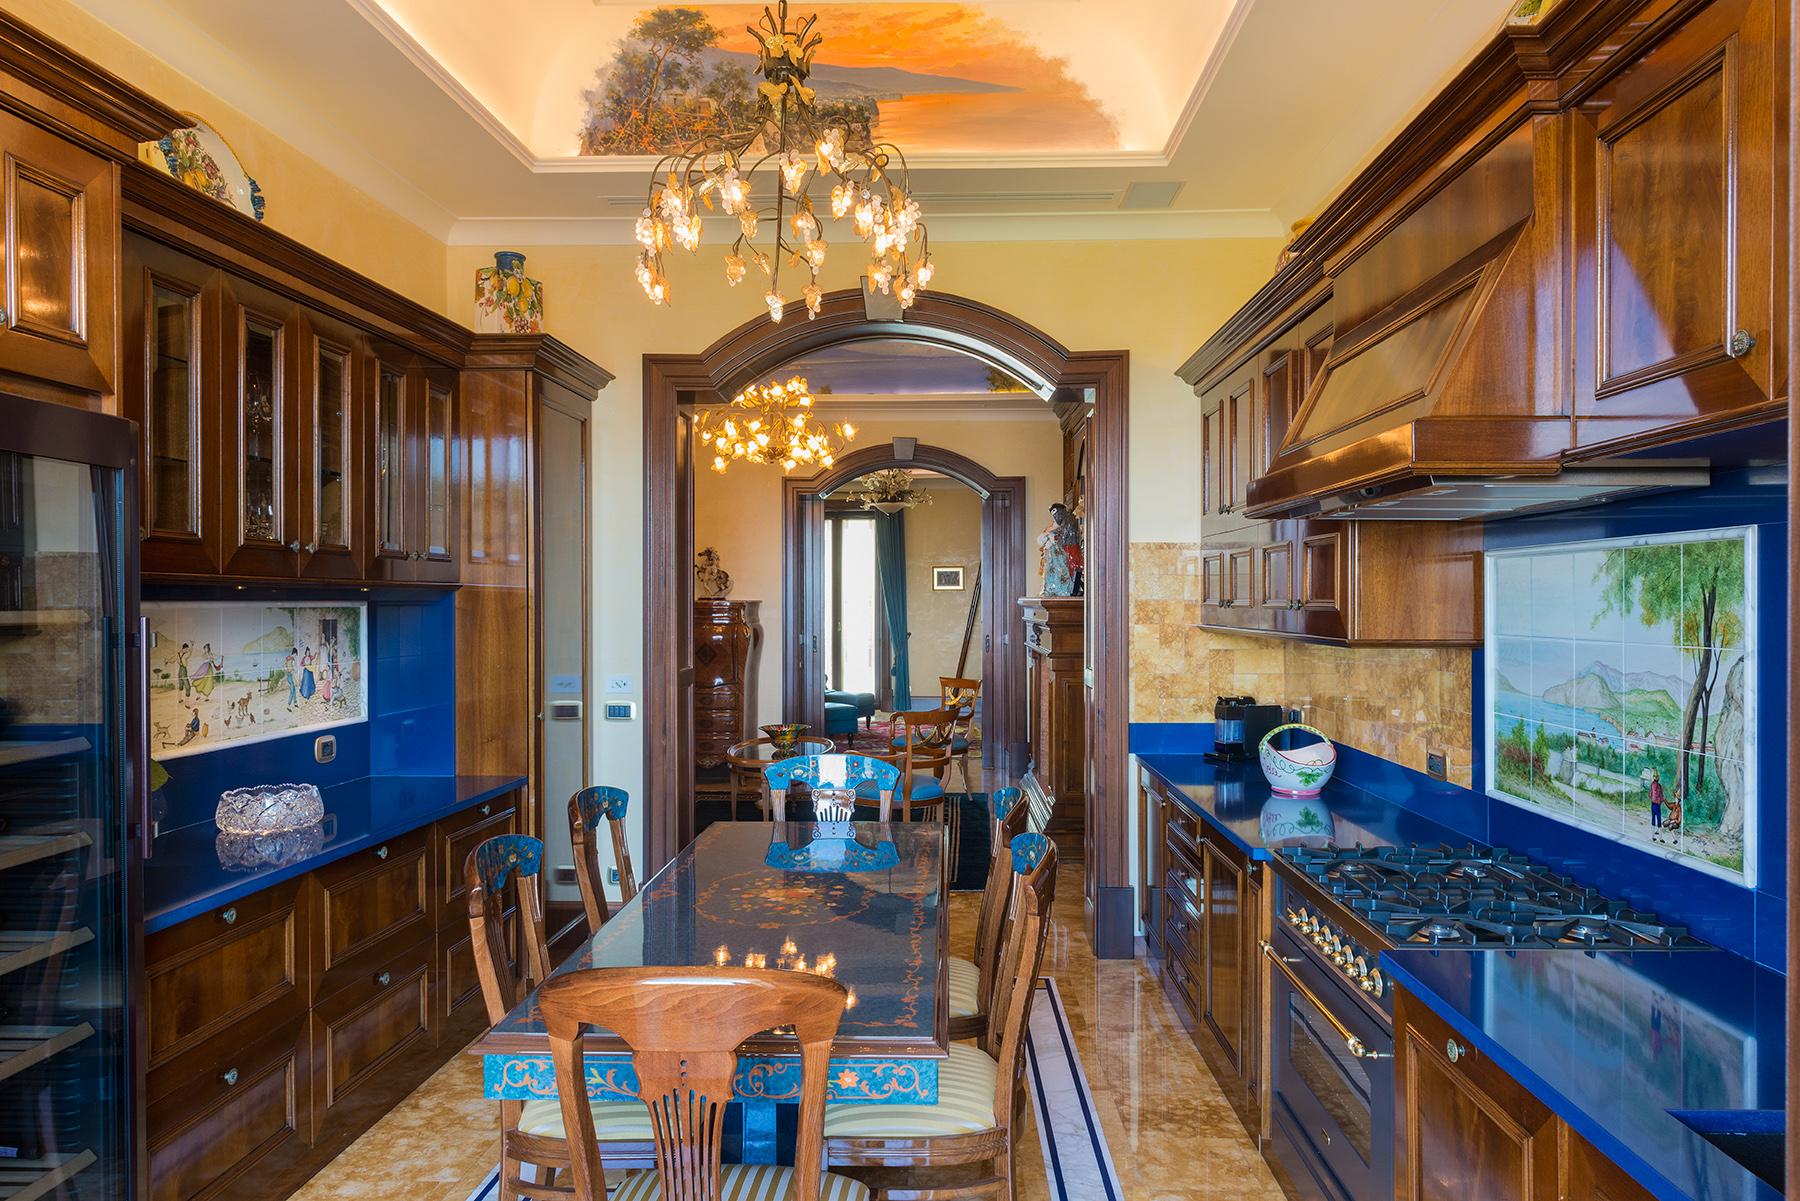                                                     Spectacular apartment in the center of Sorrento, Amalfi Coast                                                     - 3